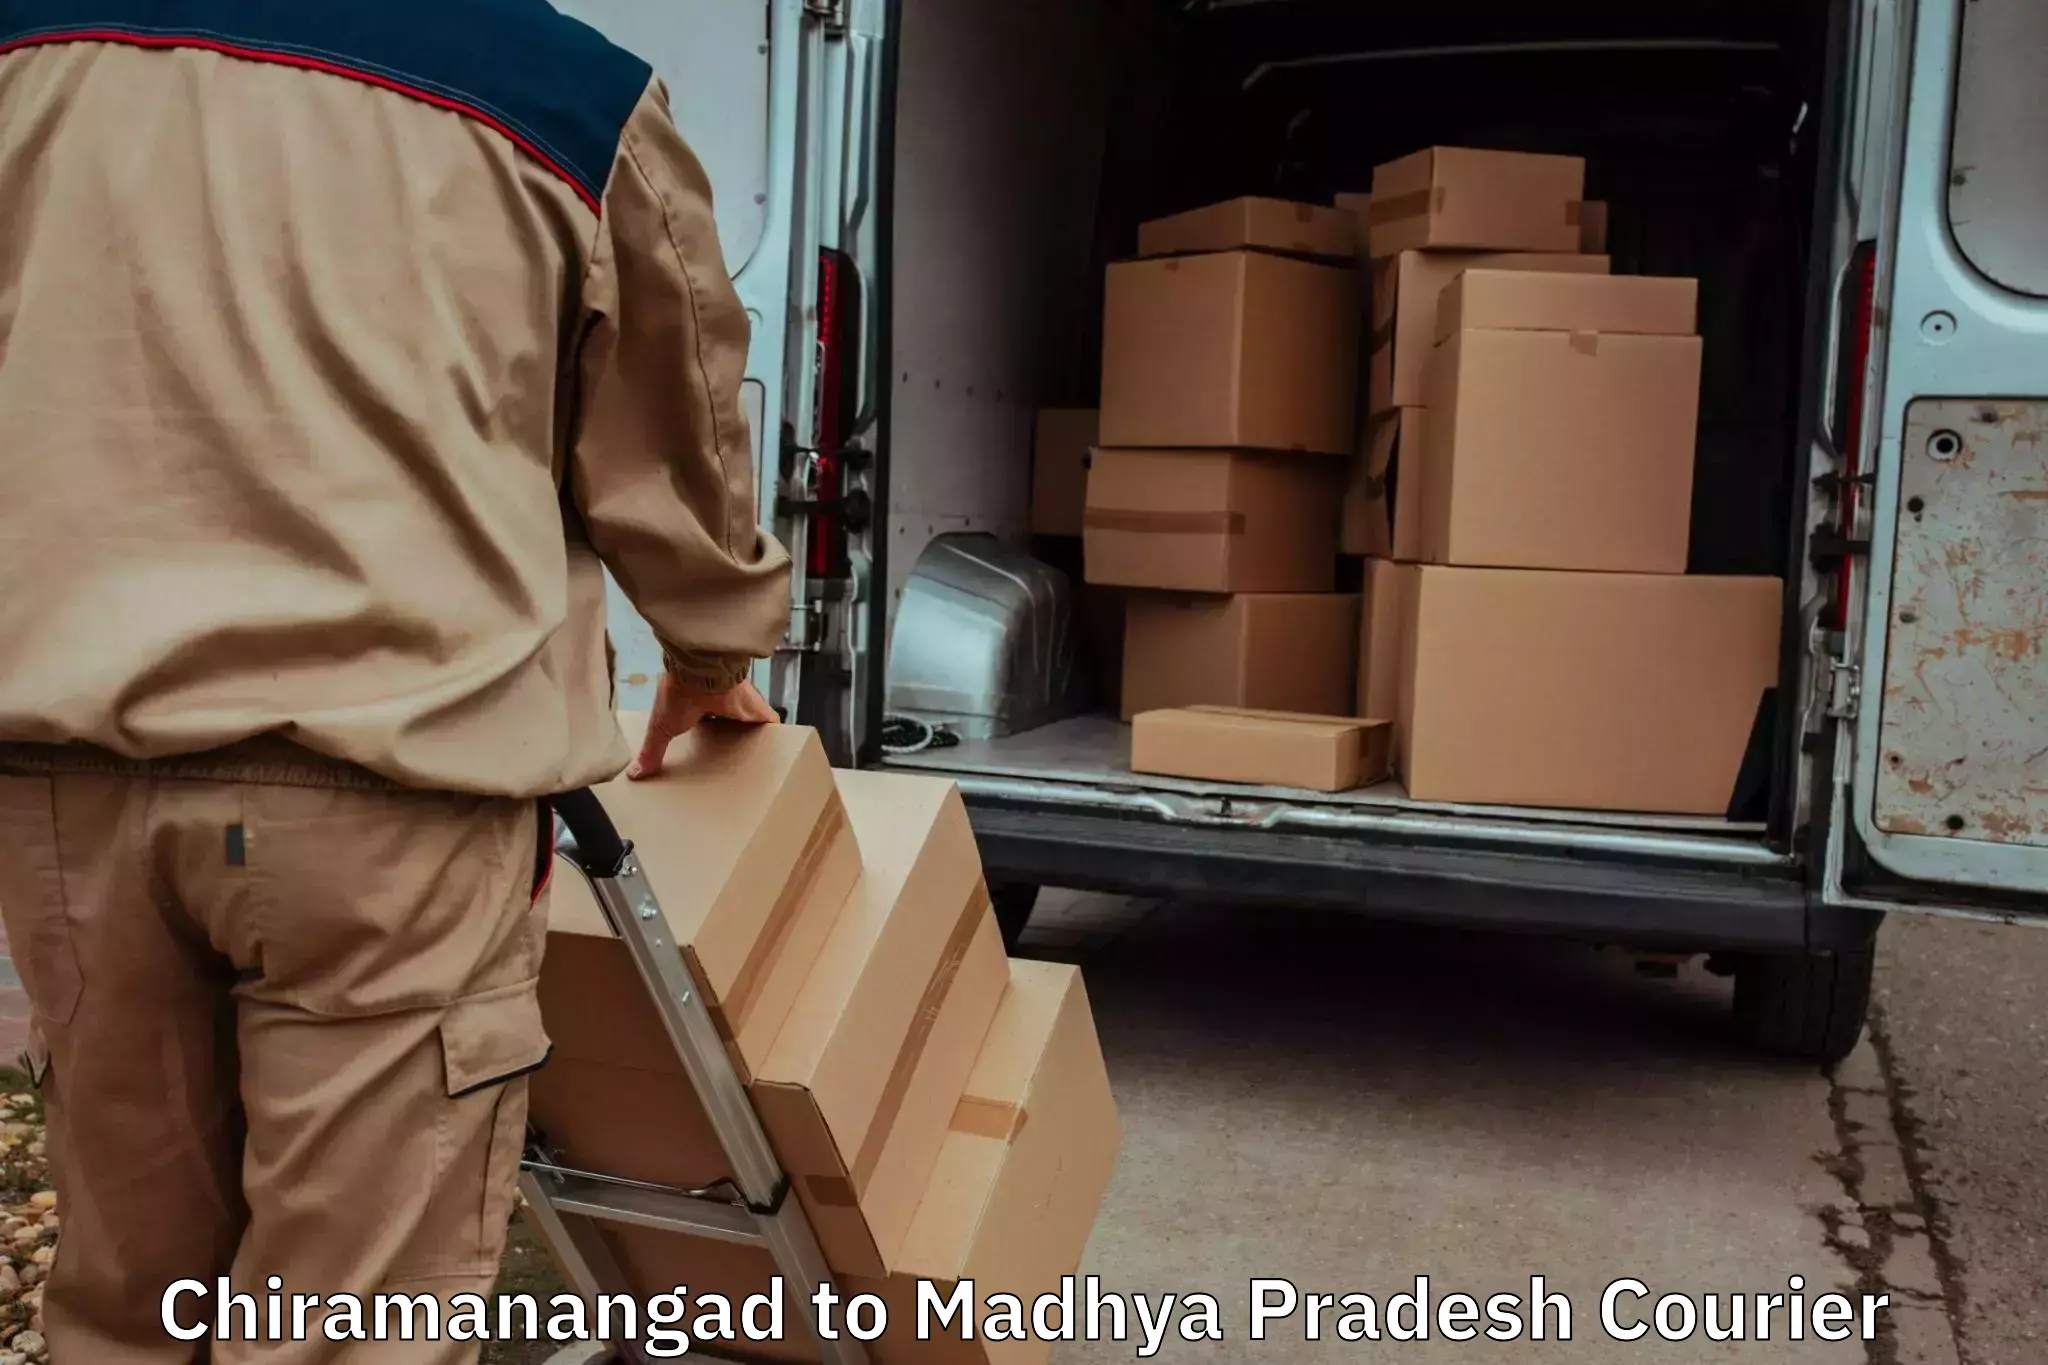 Trusted moving company Chiramanangad to Bichhiya